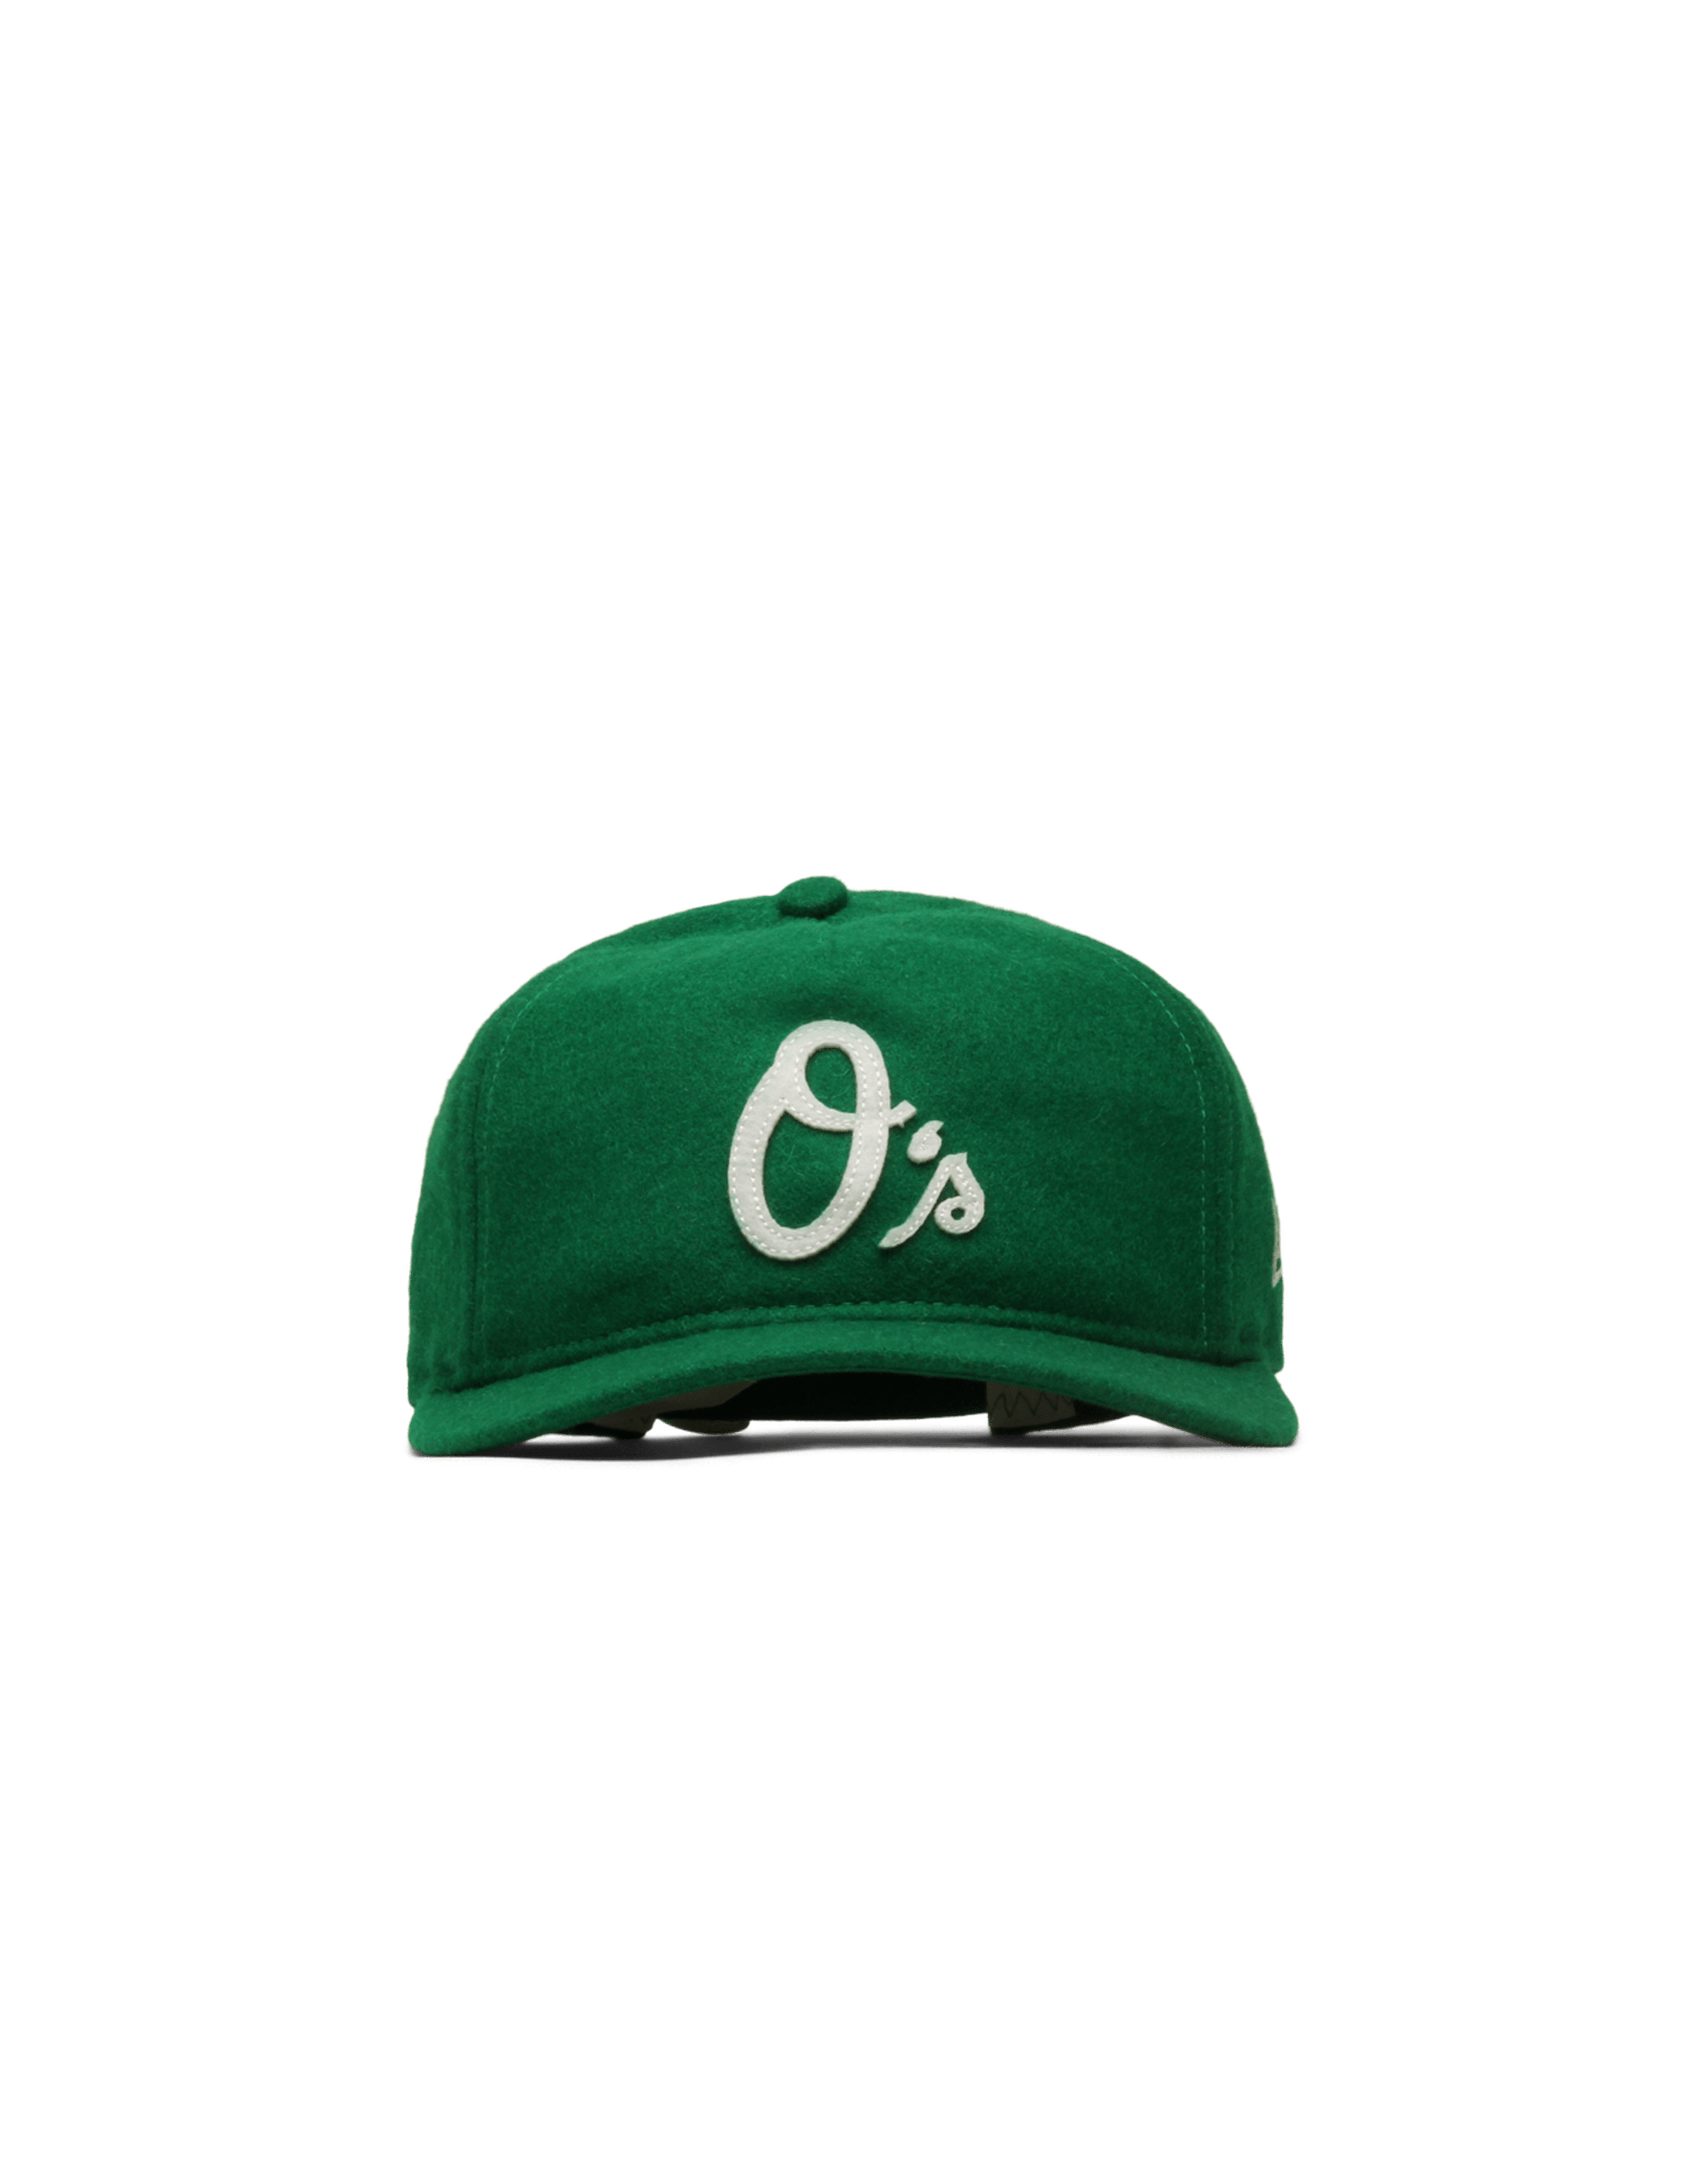 Baltimore Orioles Cooperstown 9FIFTY Adjustable Cap